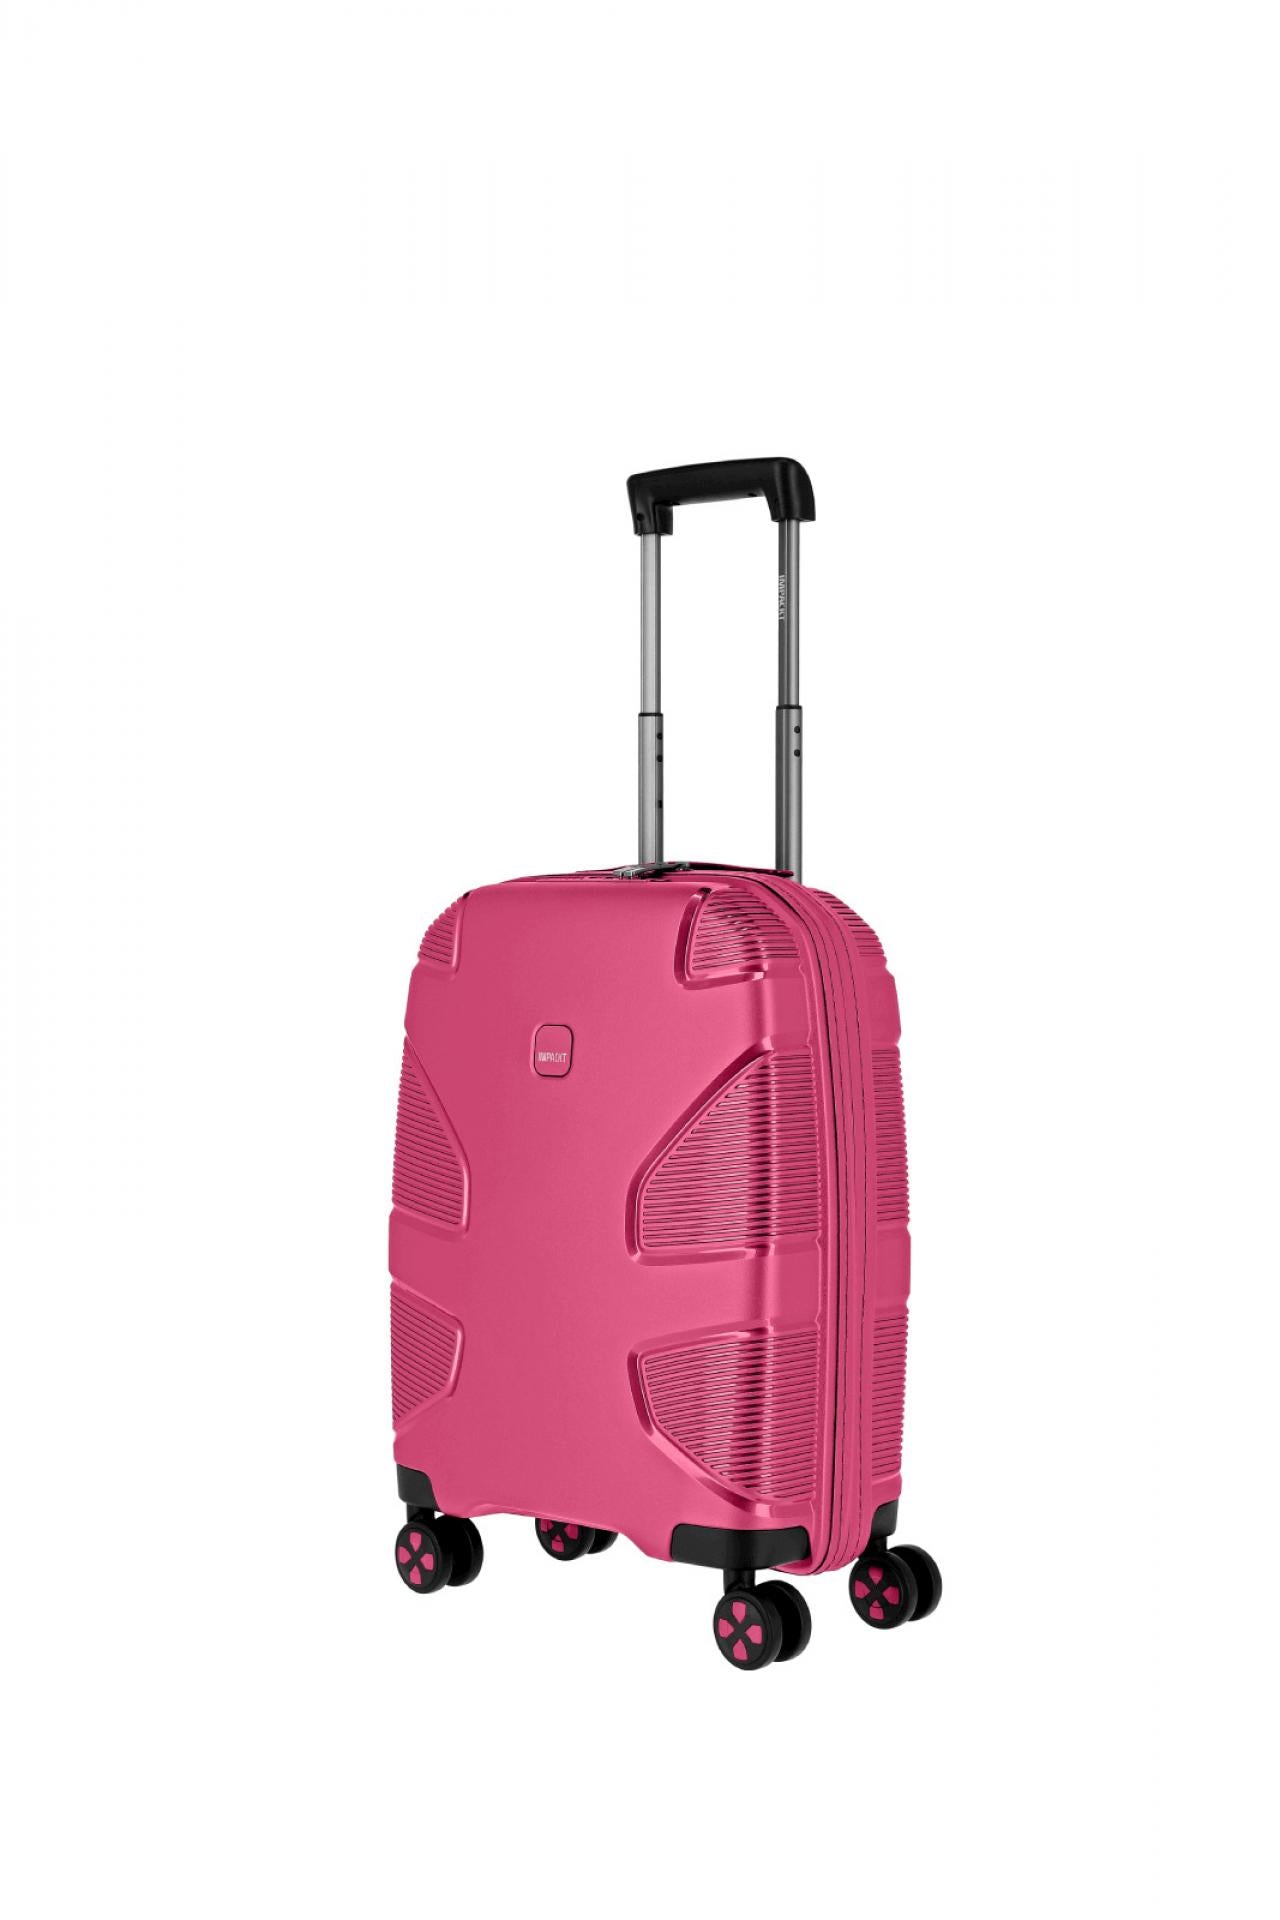 Impackt IP1 Trolley S Pink 55cm